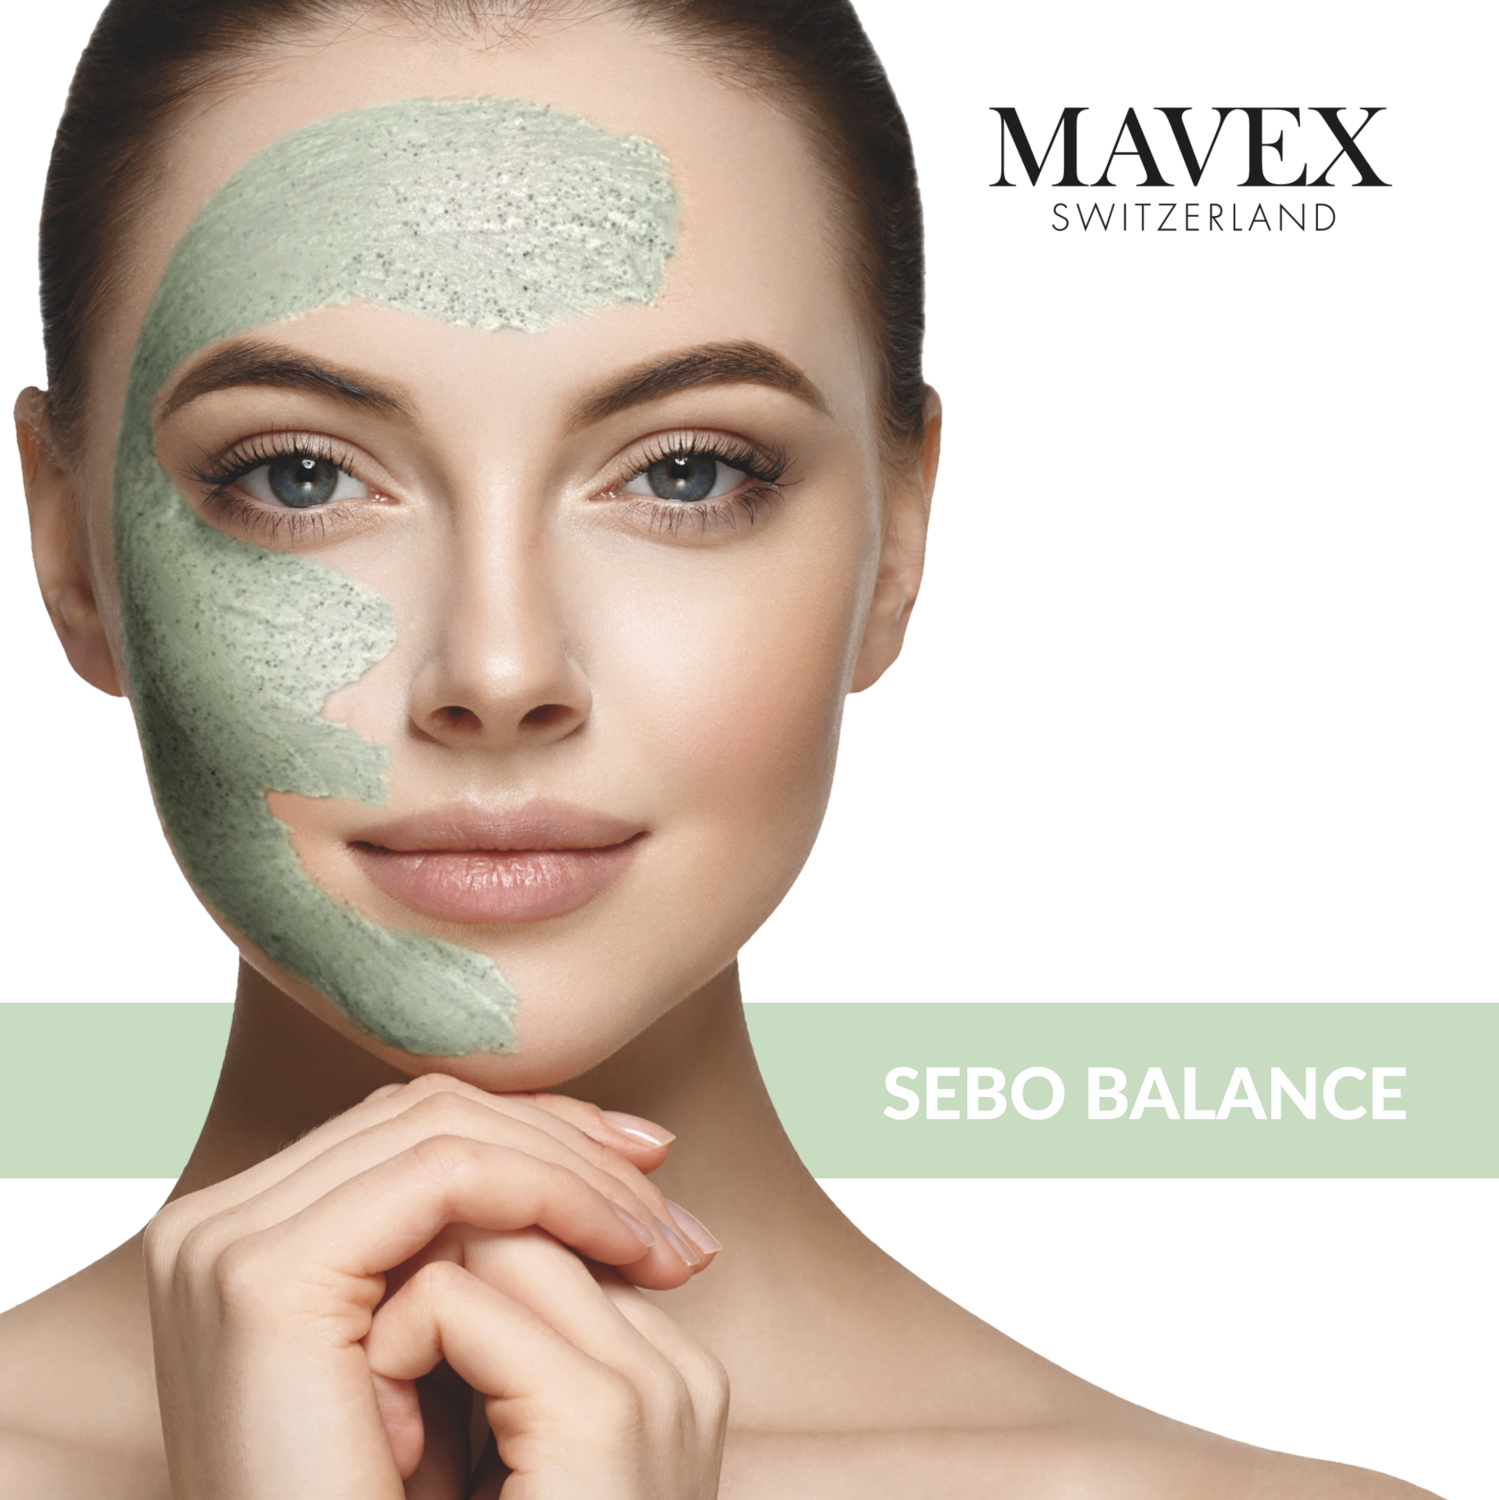 Mavex Sebo Balance, Acne e Pelle Grassa